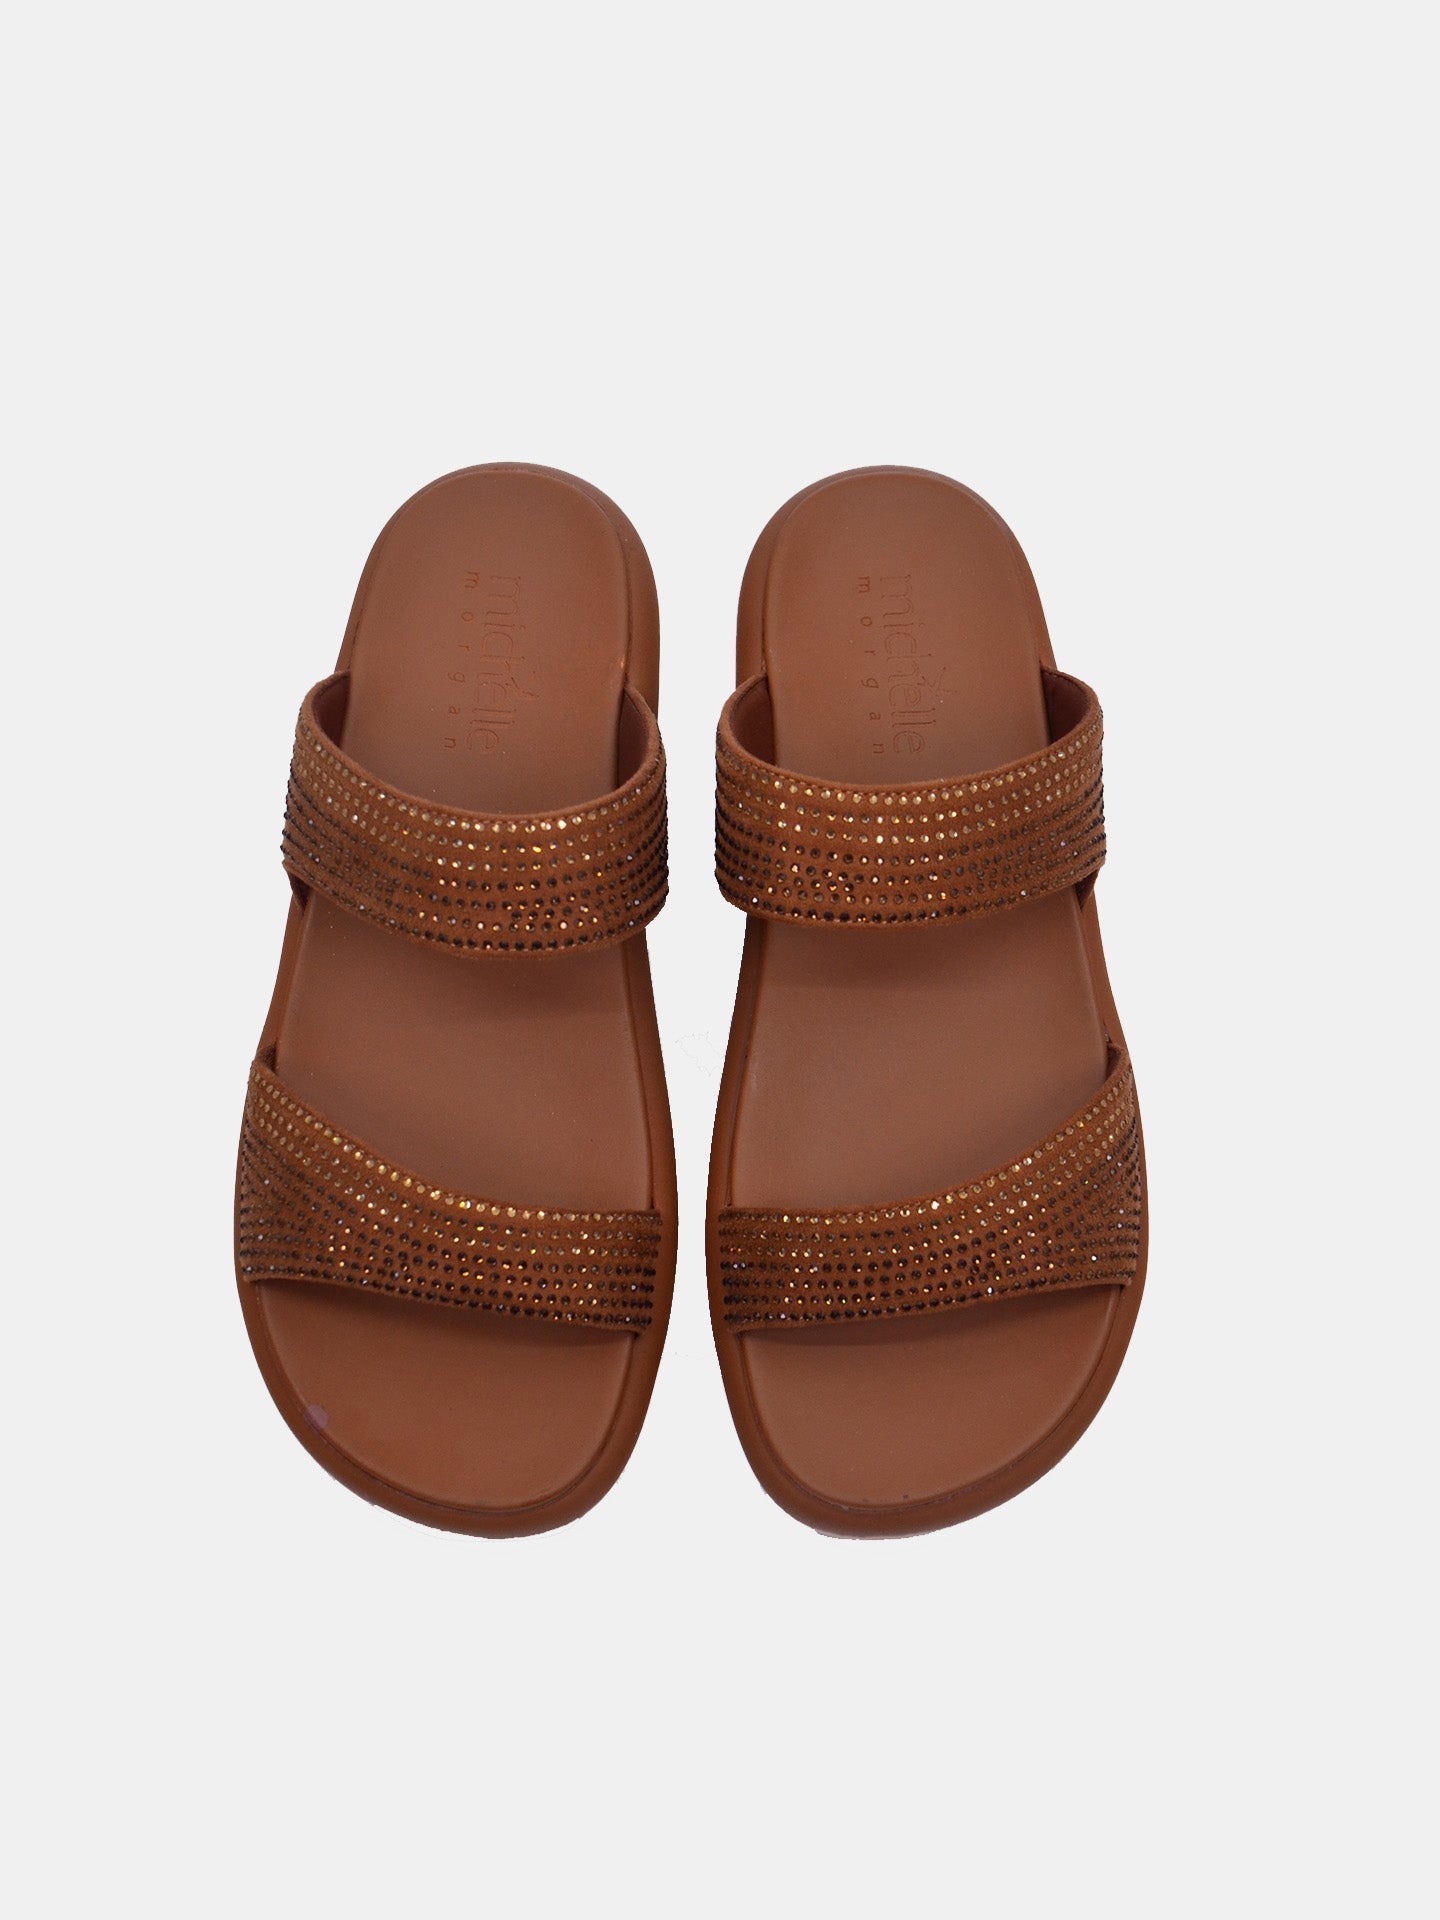 Michelle Morgan 114RC71I Women's Flat Sandals #color_Brown